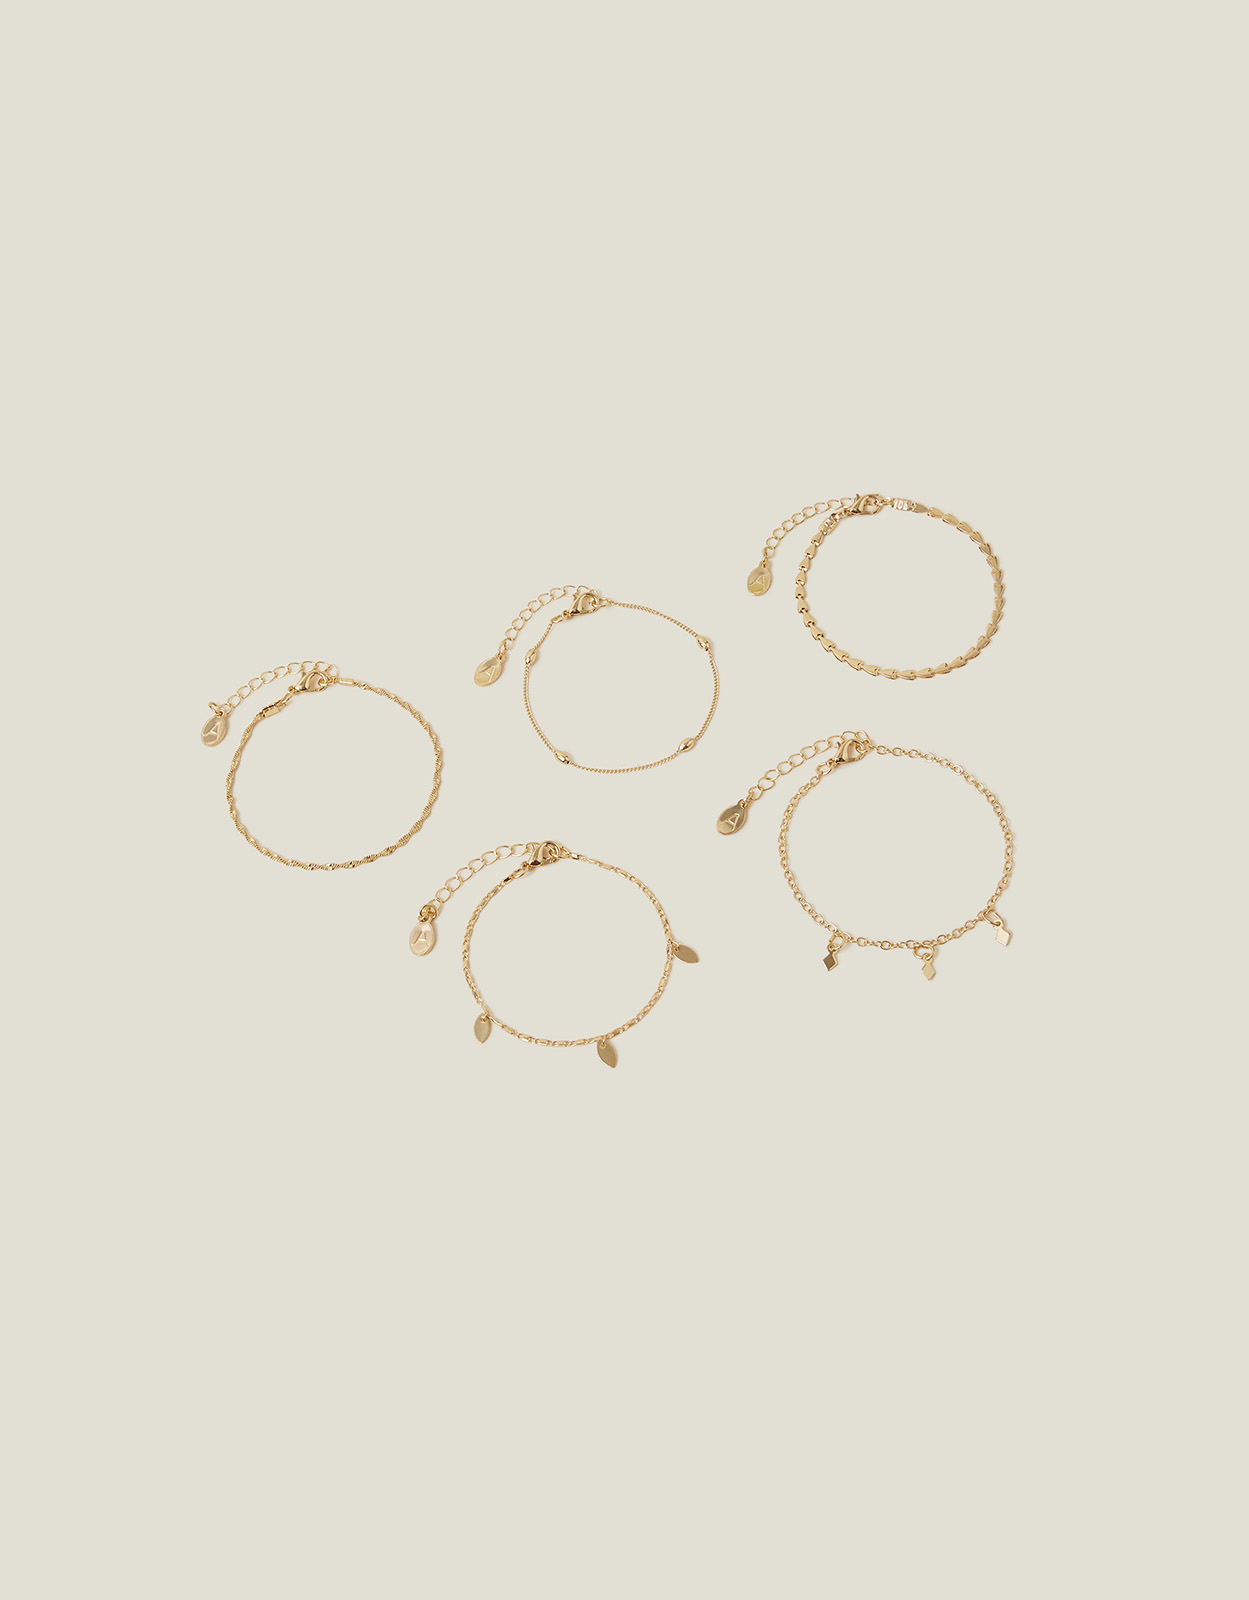 Accessorize Women's Gold Stylish Brass Pack of 5 Delicate Chain Bracelets, Size: 2cm